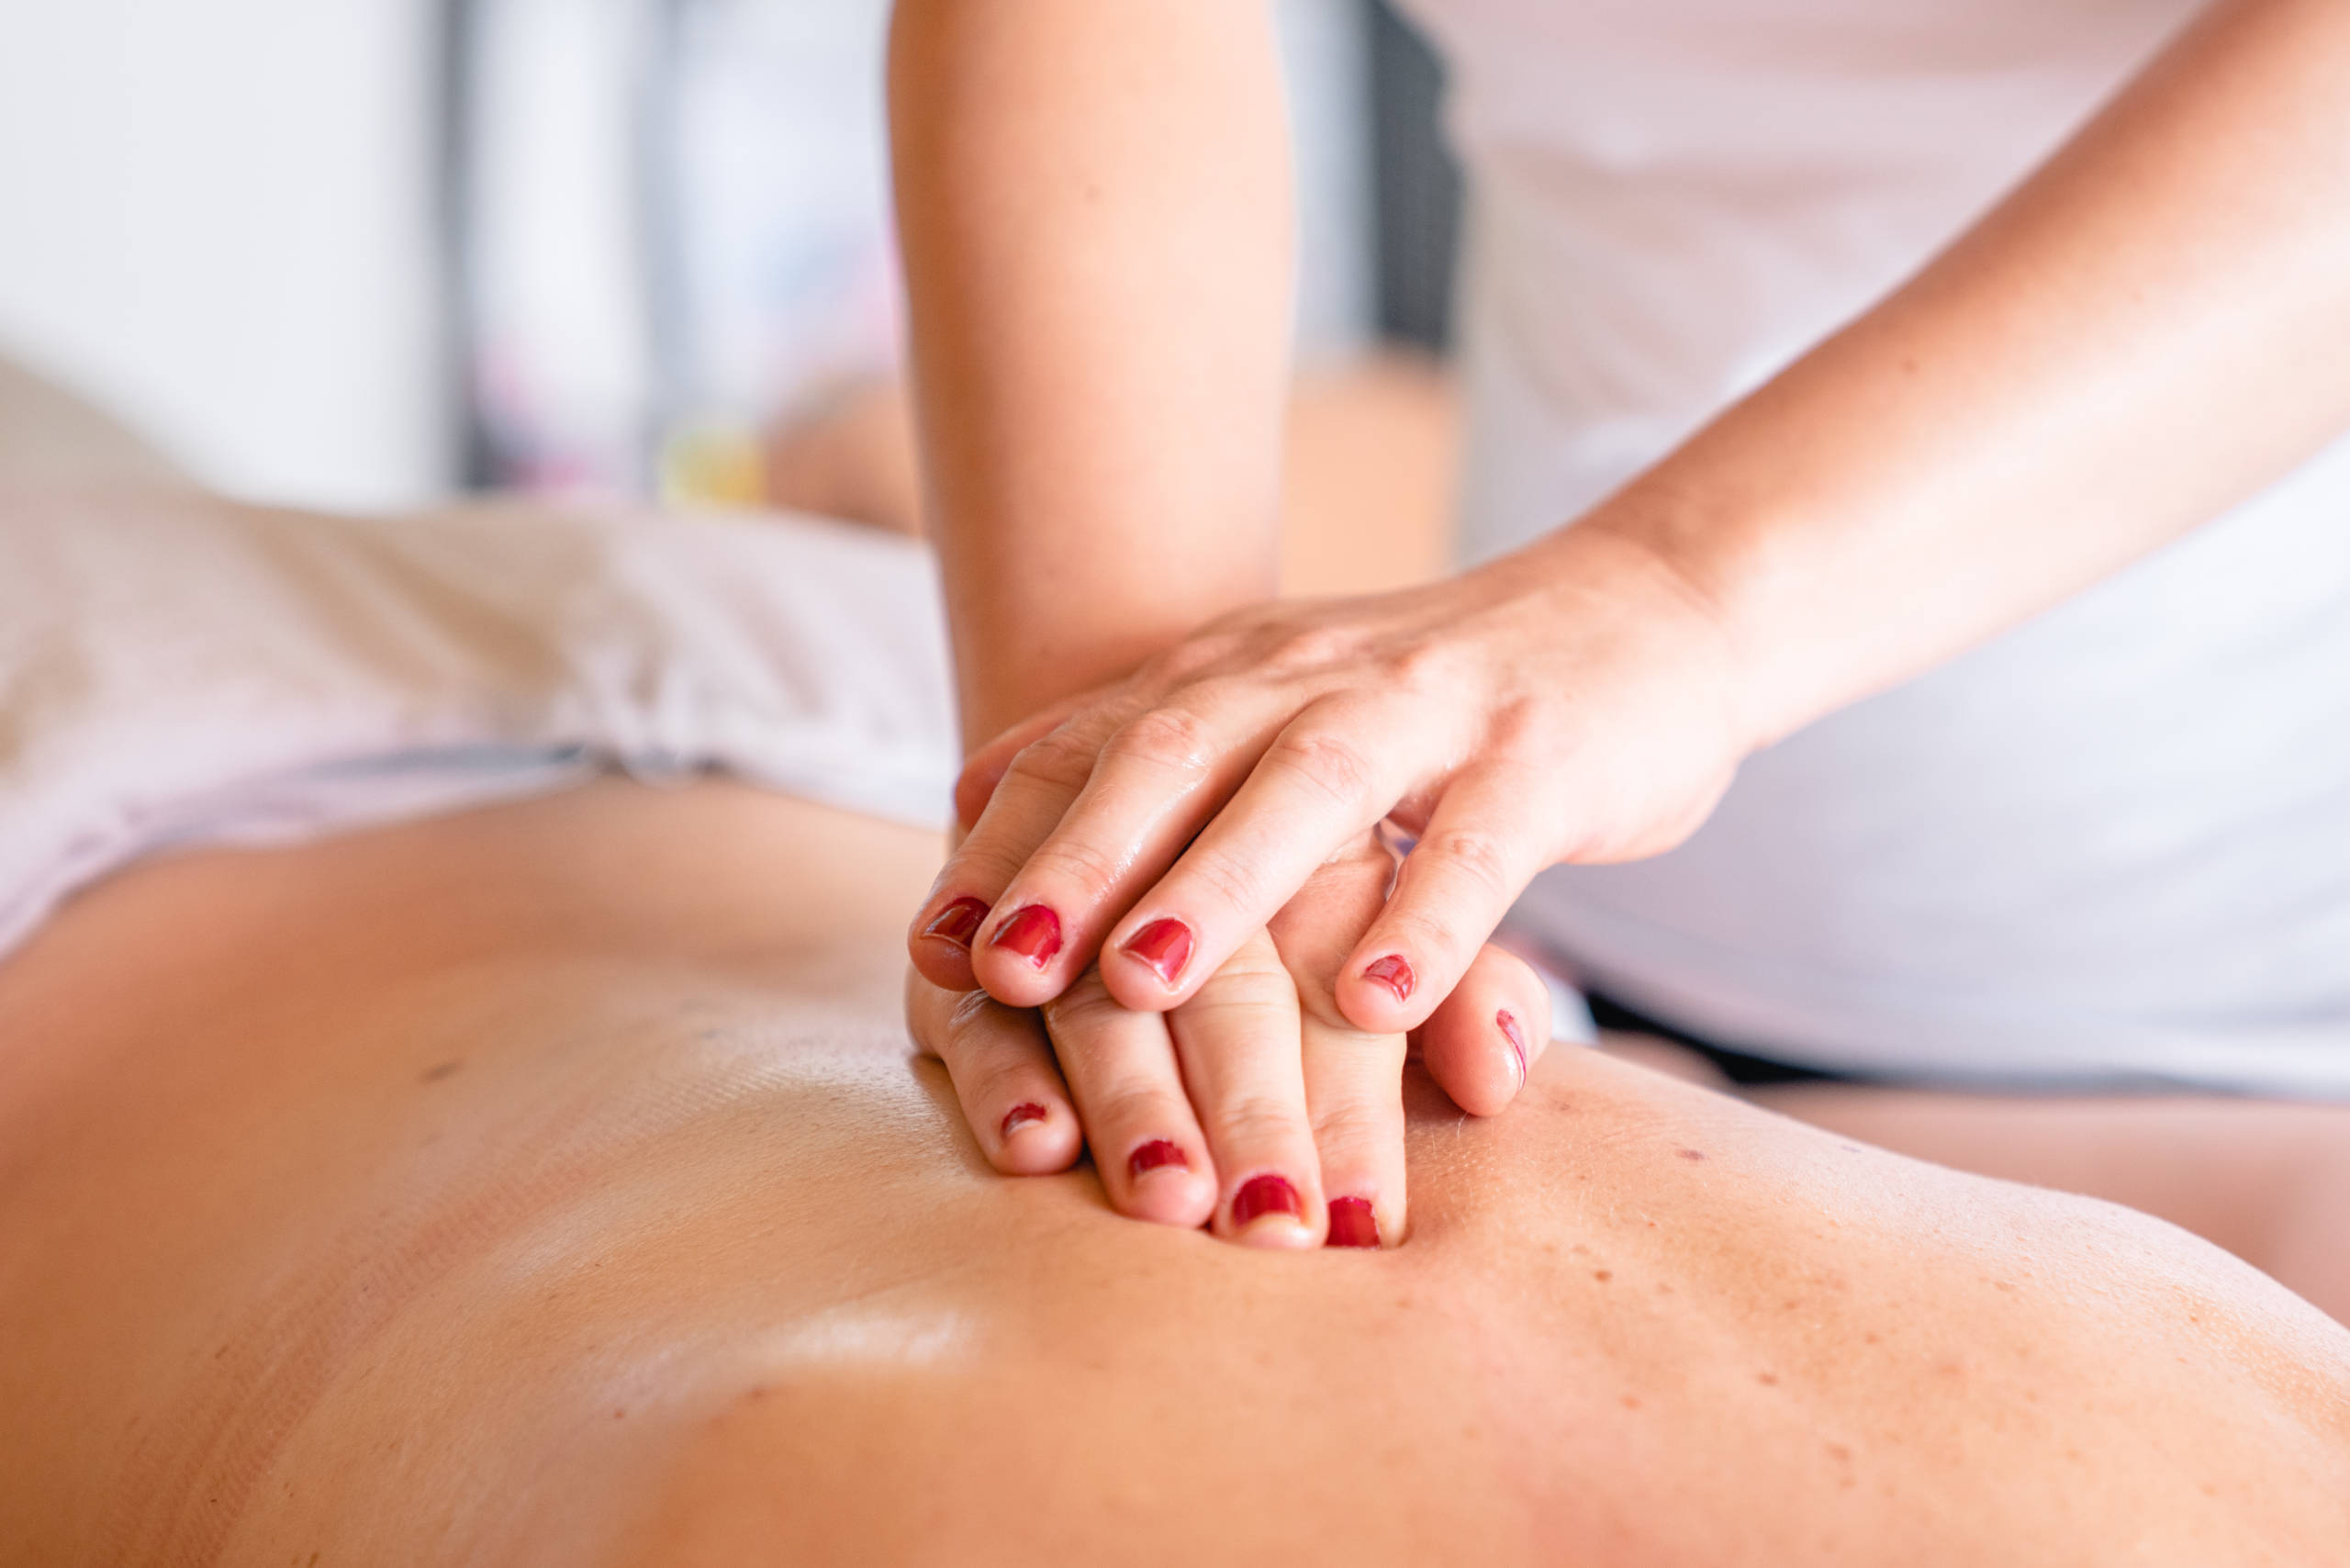 Massage - Gabriele Fuchs - Rückenbehandlung - Hände am Rücken